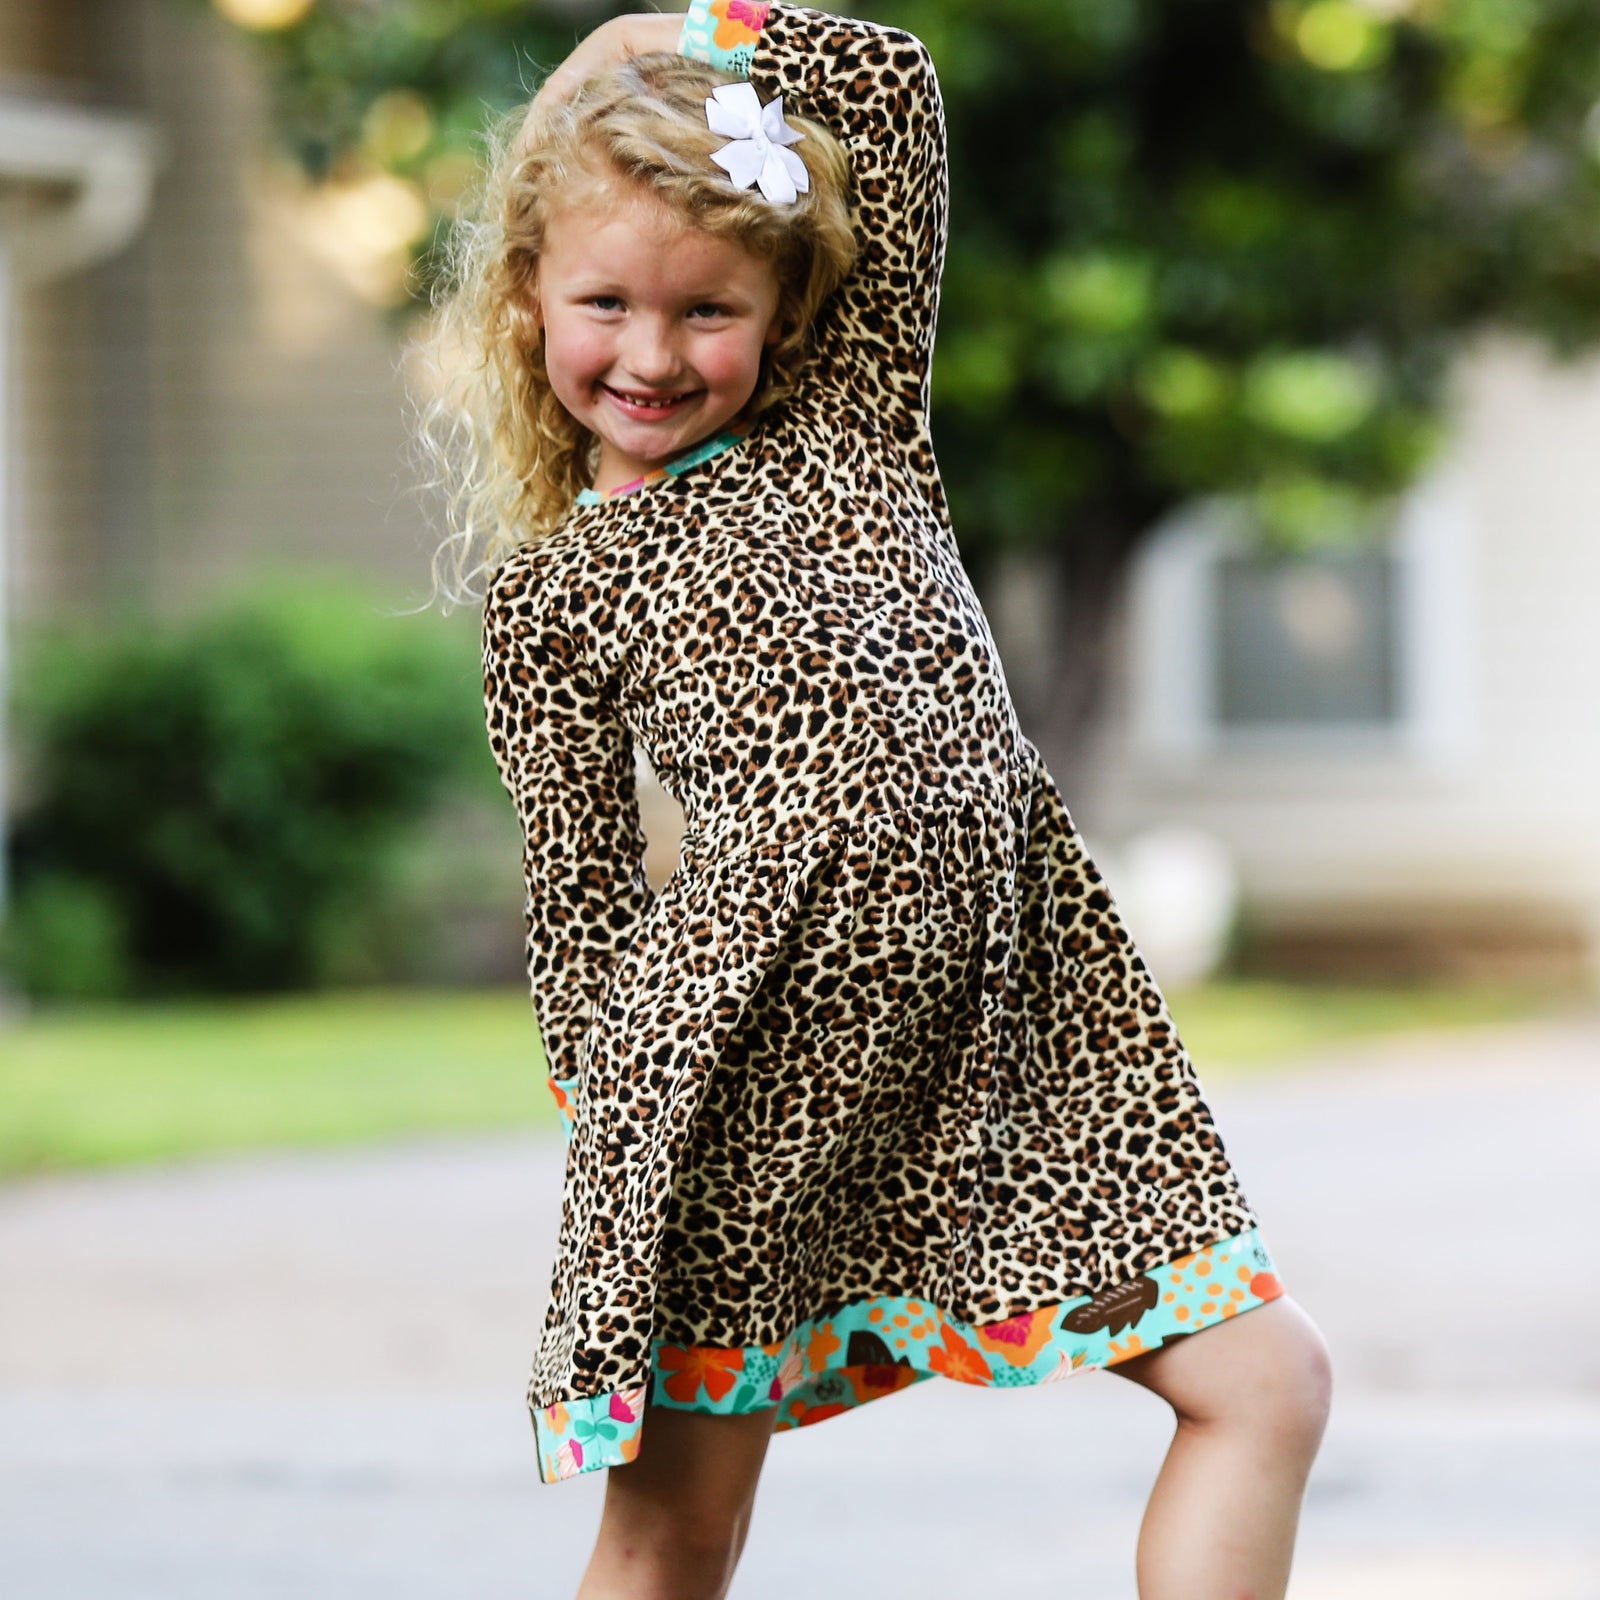 Leopard Rose Long Sleeve Fall Little & Big Girls Floral Dress for Sizes 2/3T - 9/10 by AnnLoren